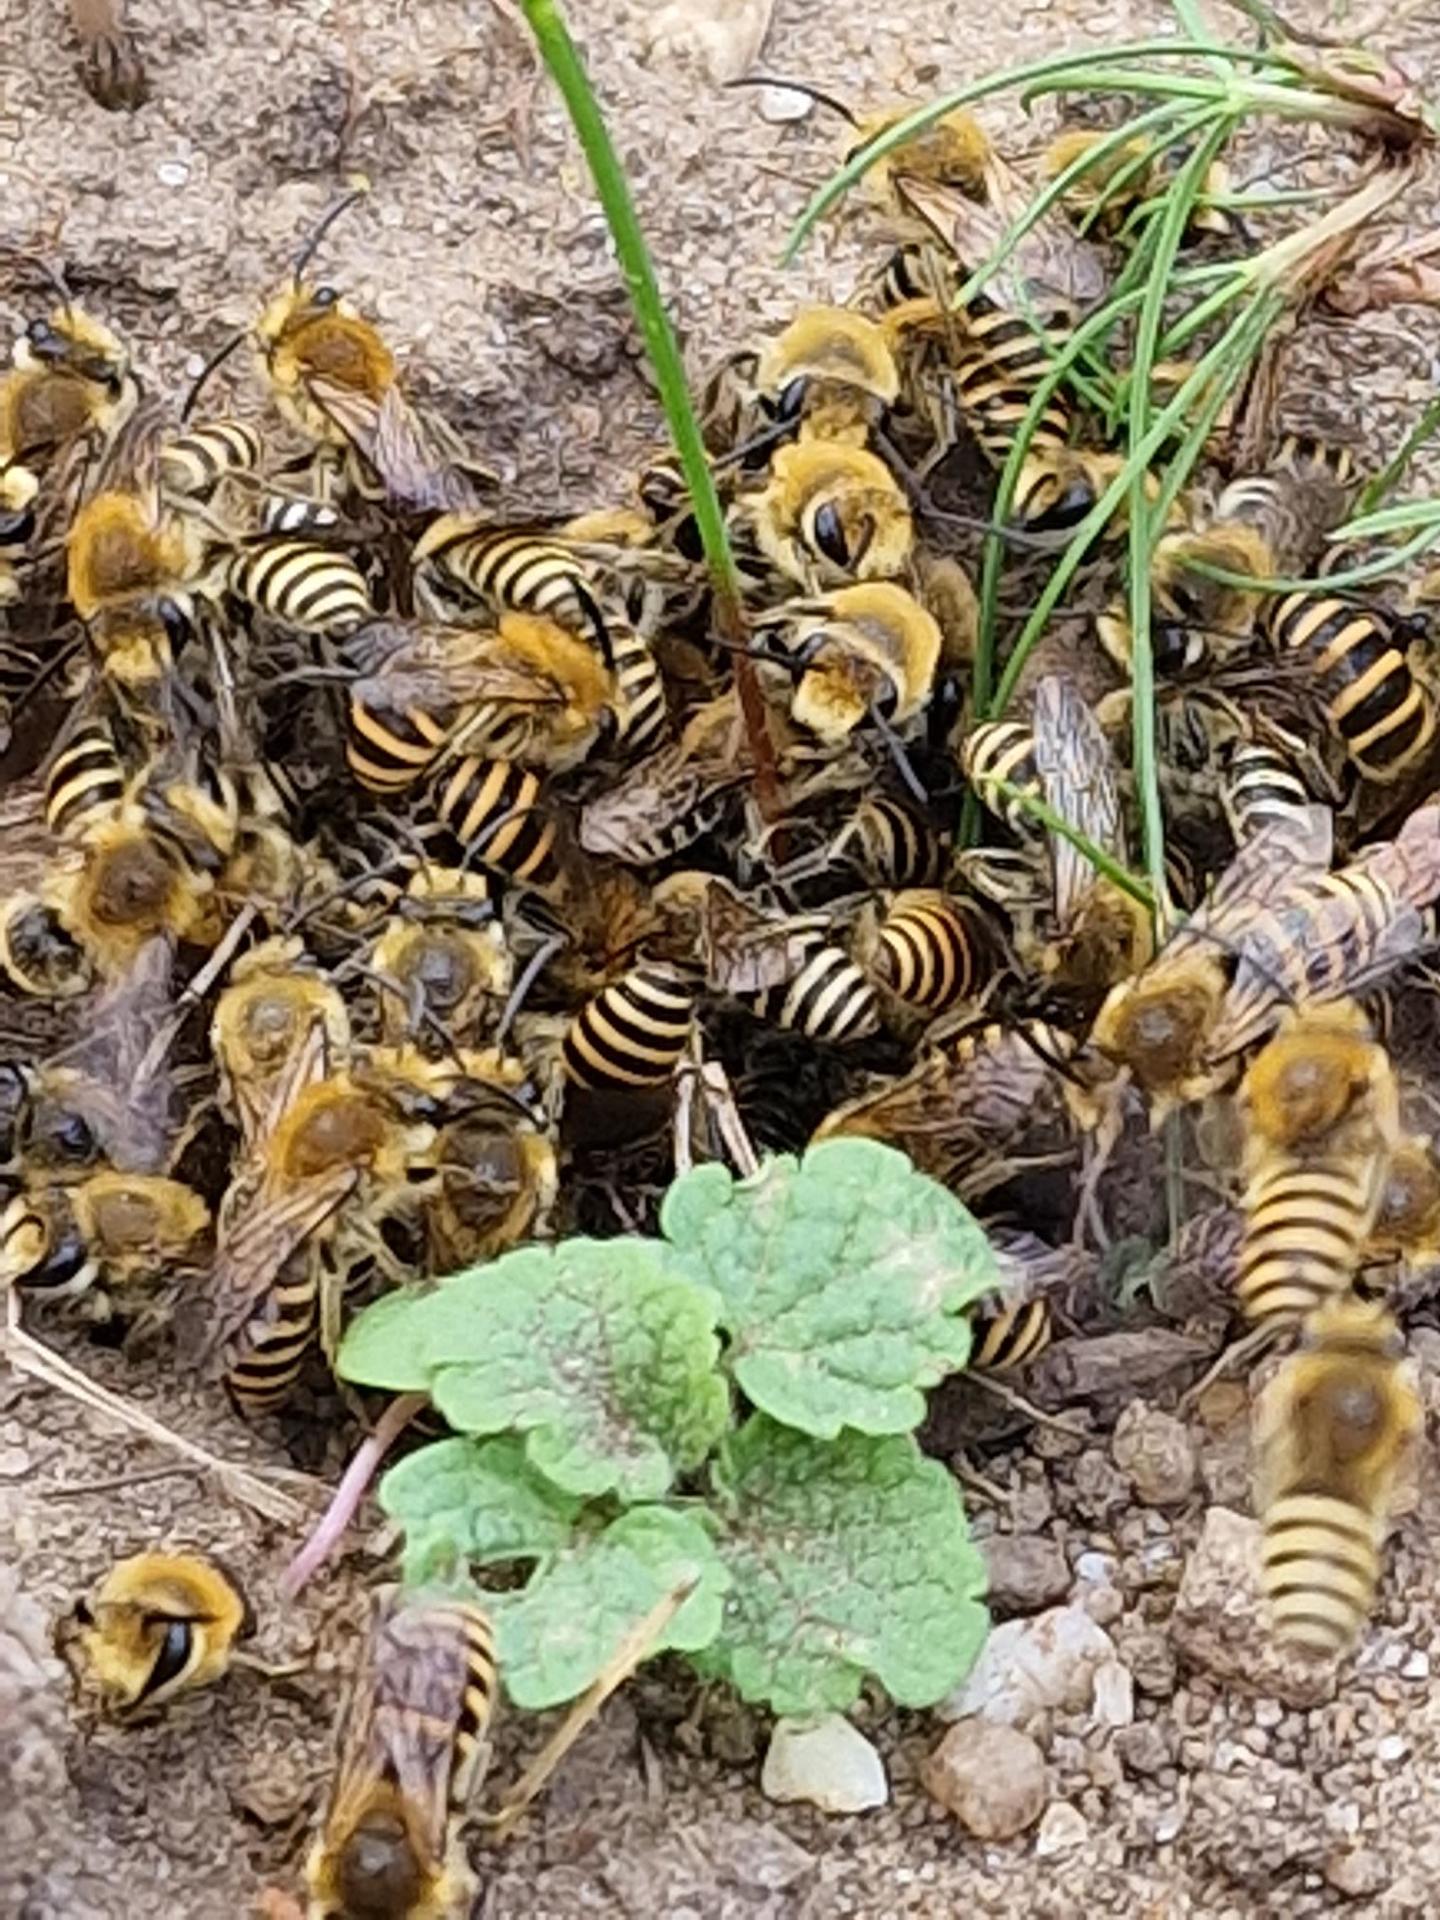 mining bees